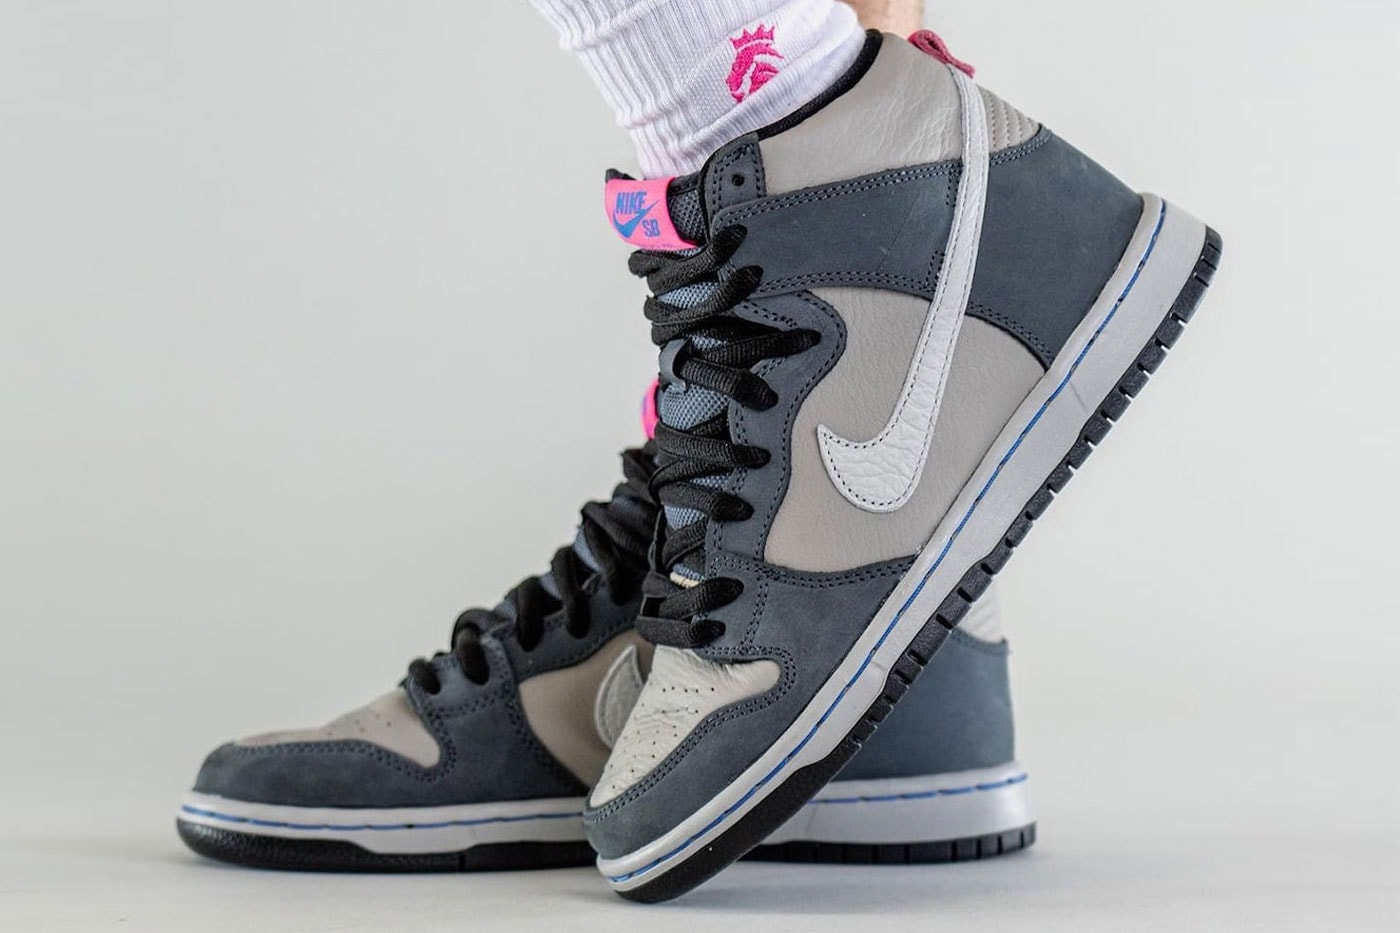 Nike SB Dunk High “Medium Gray” Official Look Footwear sneaker Swoosh leather mesh light gray medium gray white neon pink dj9800-001